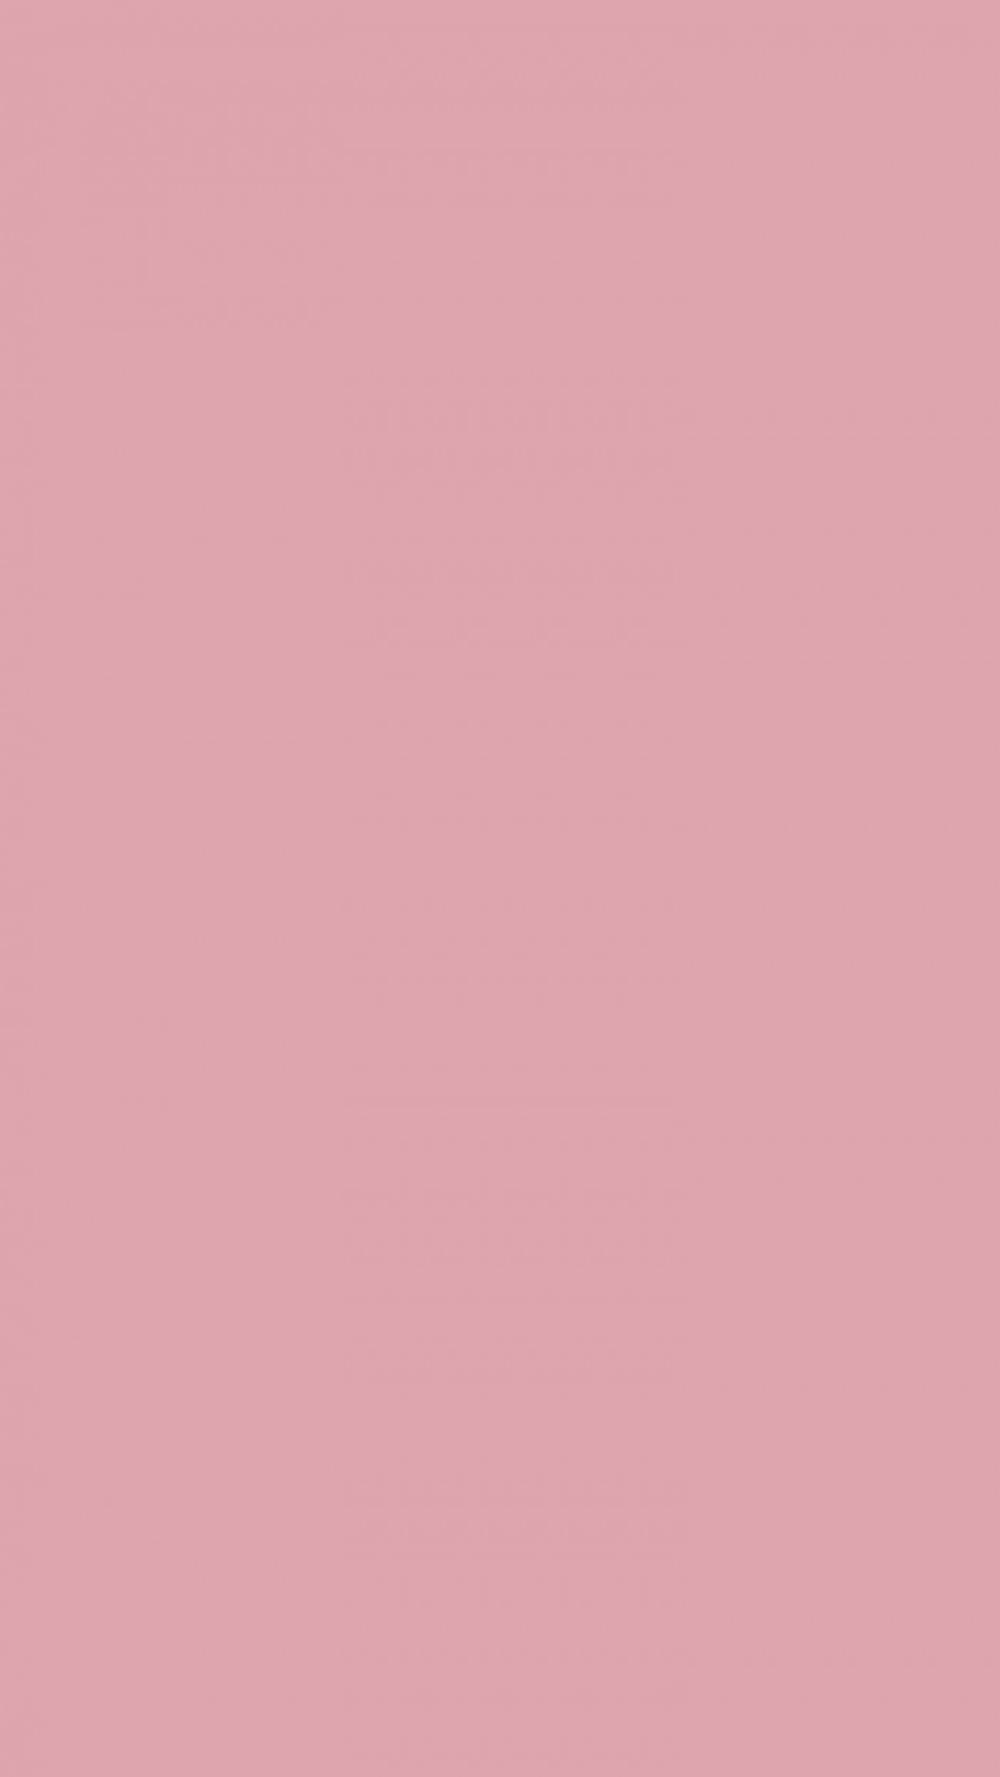 Solid Pastel Rose Pink Wallpaper